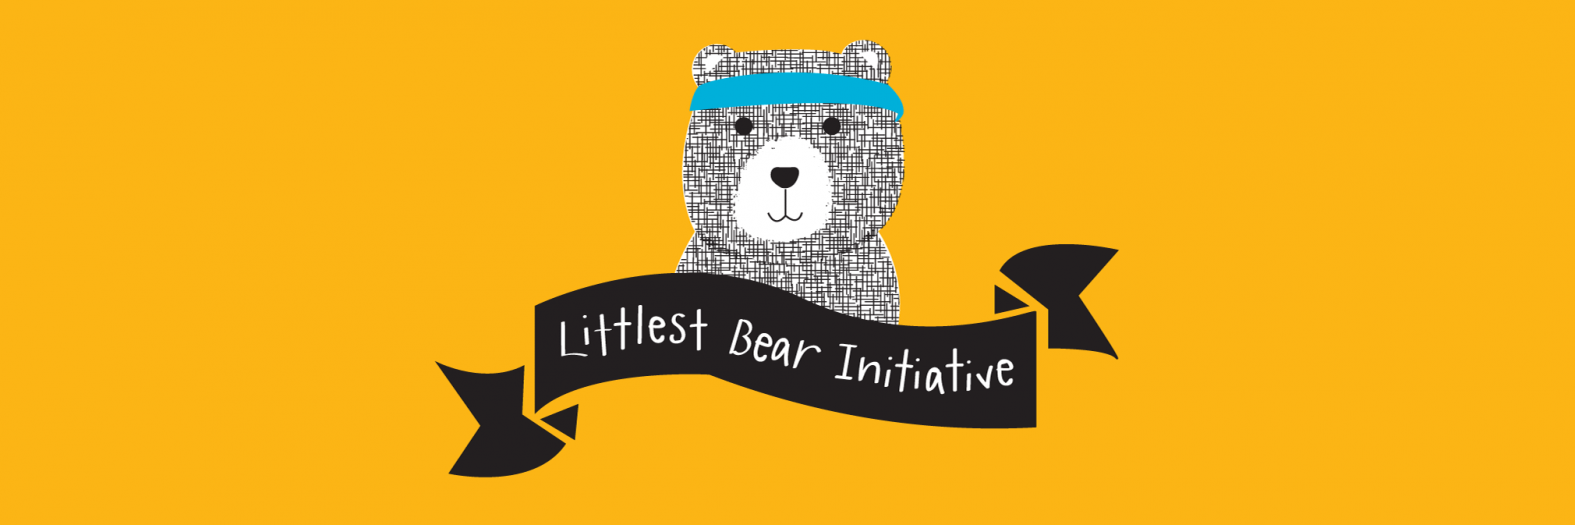 Littlest Bear Initiative